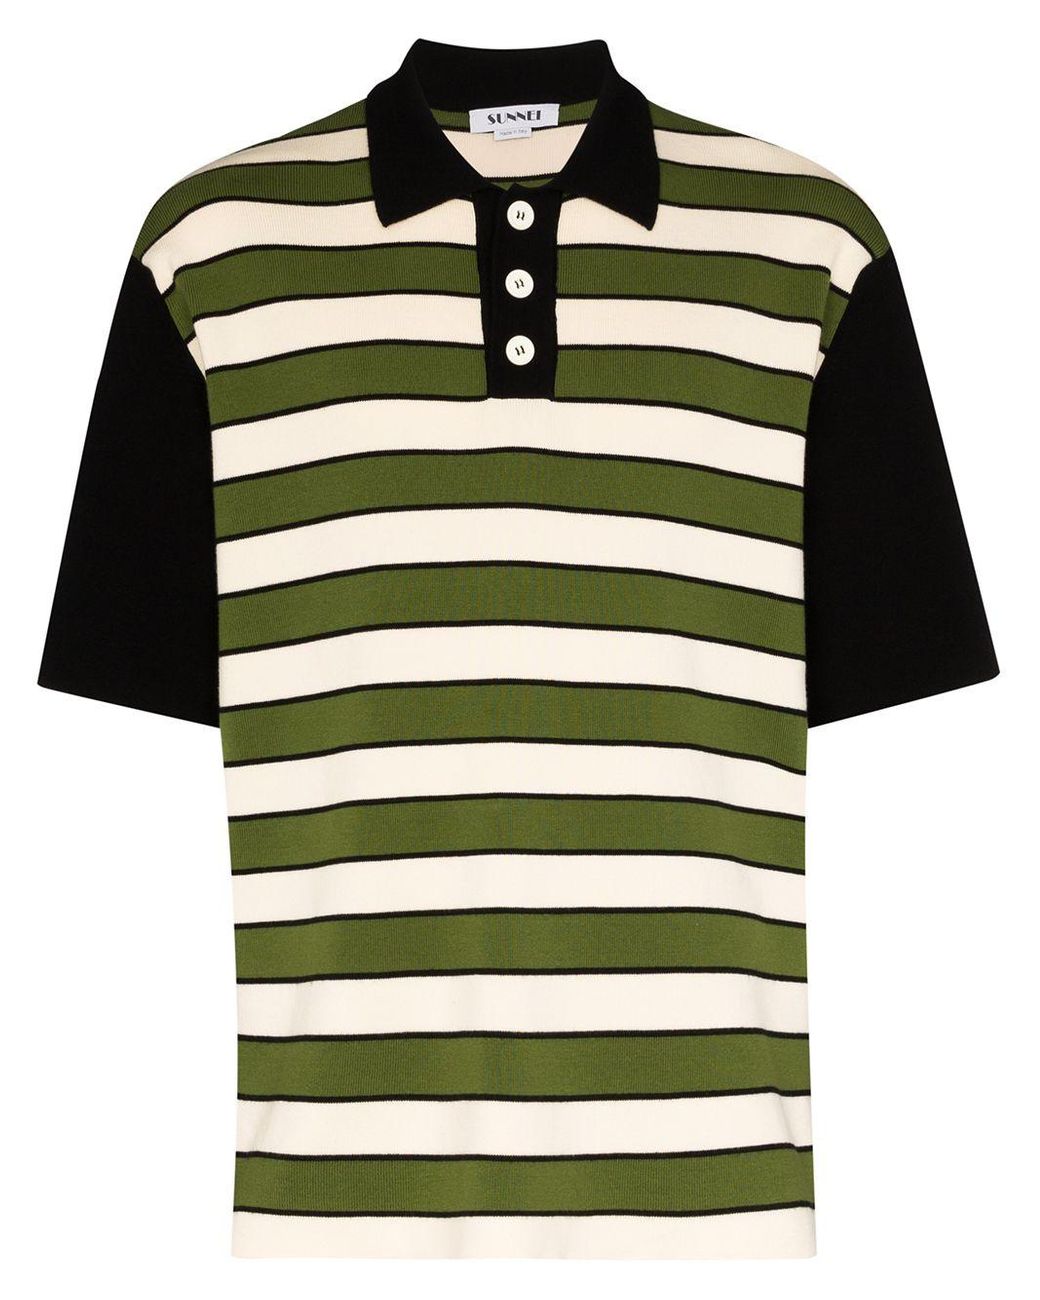 Sunnei Striped Fine-knit Polo Shirt in Green for Men - Lyst